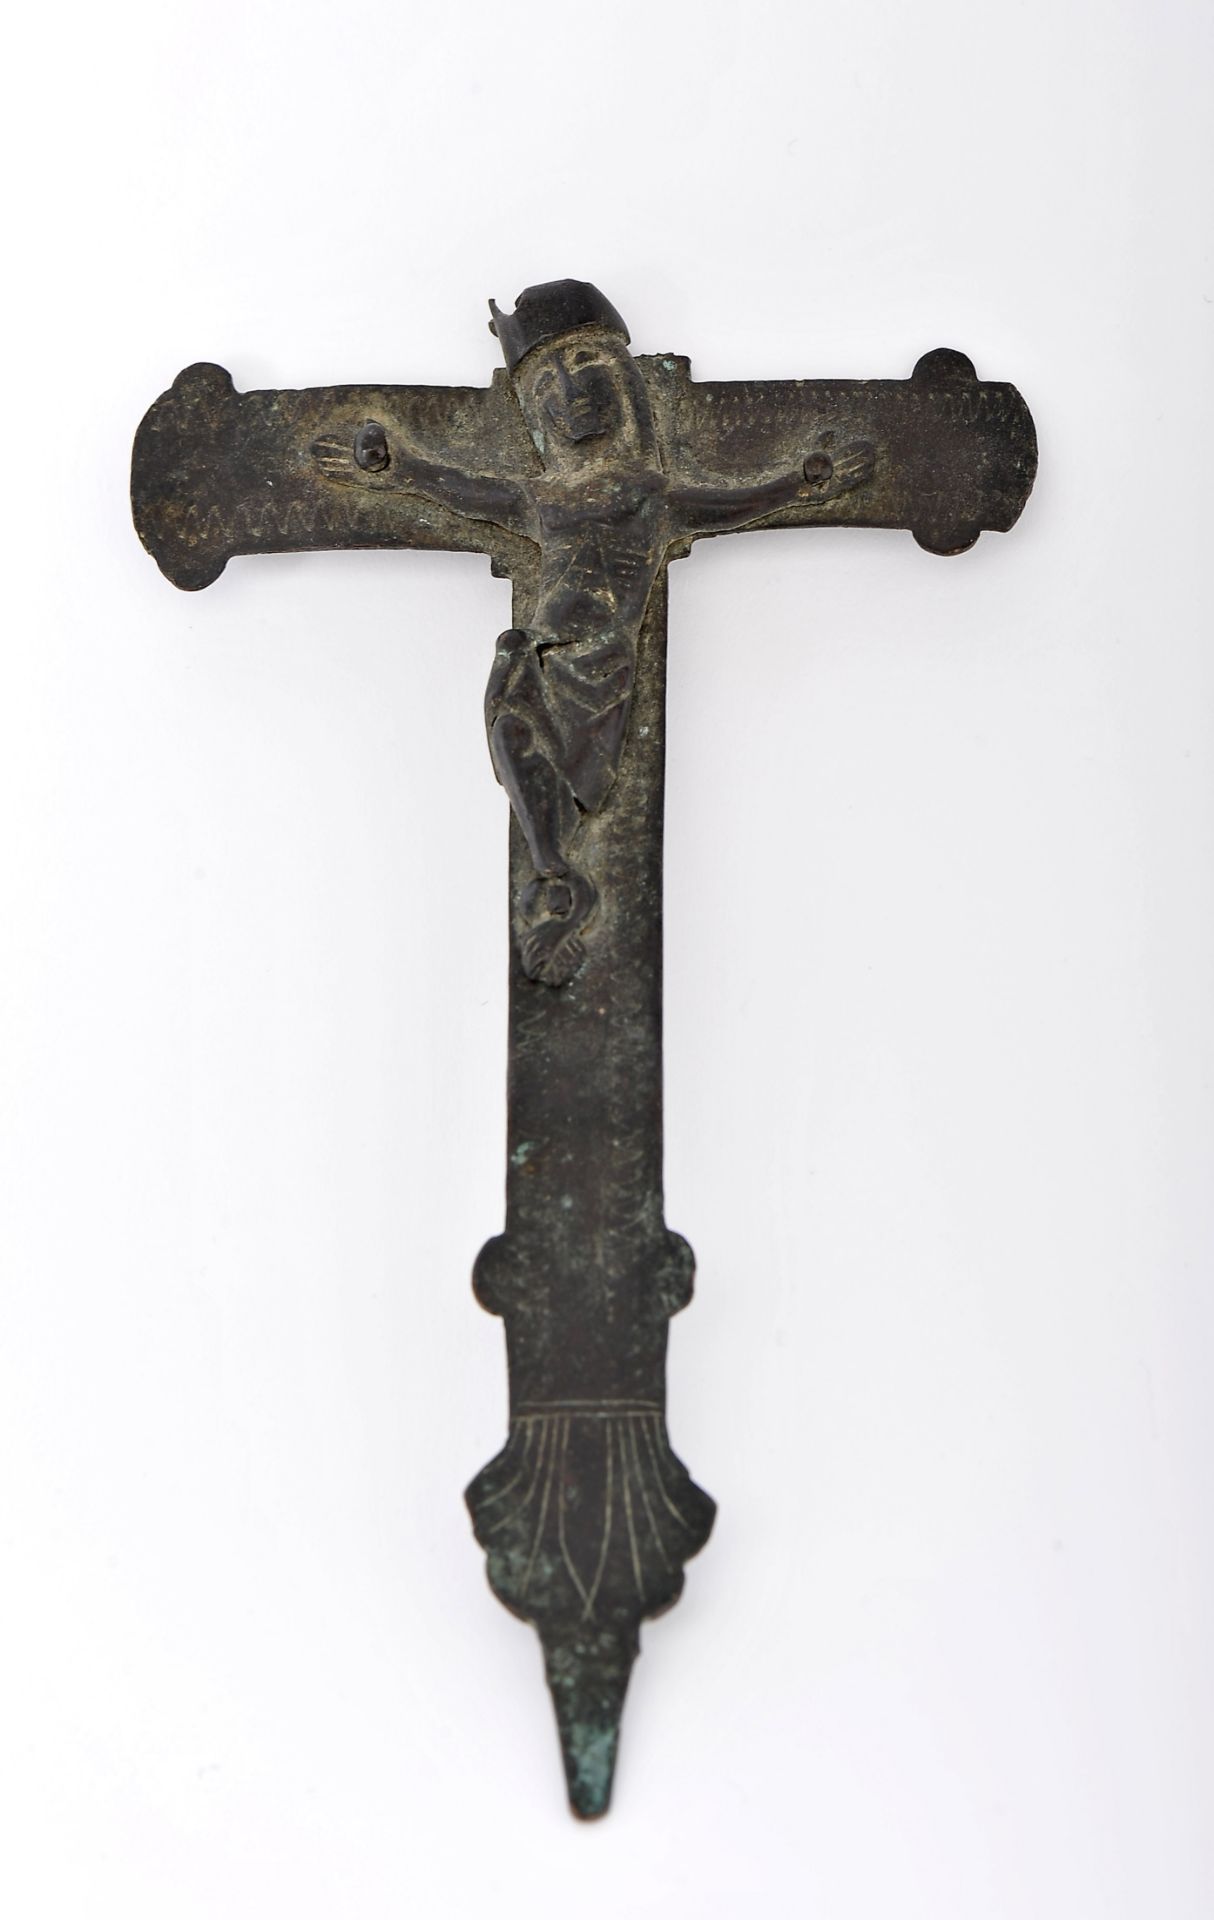 A processional cross